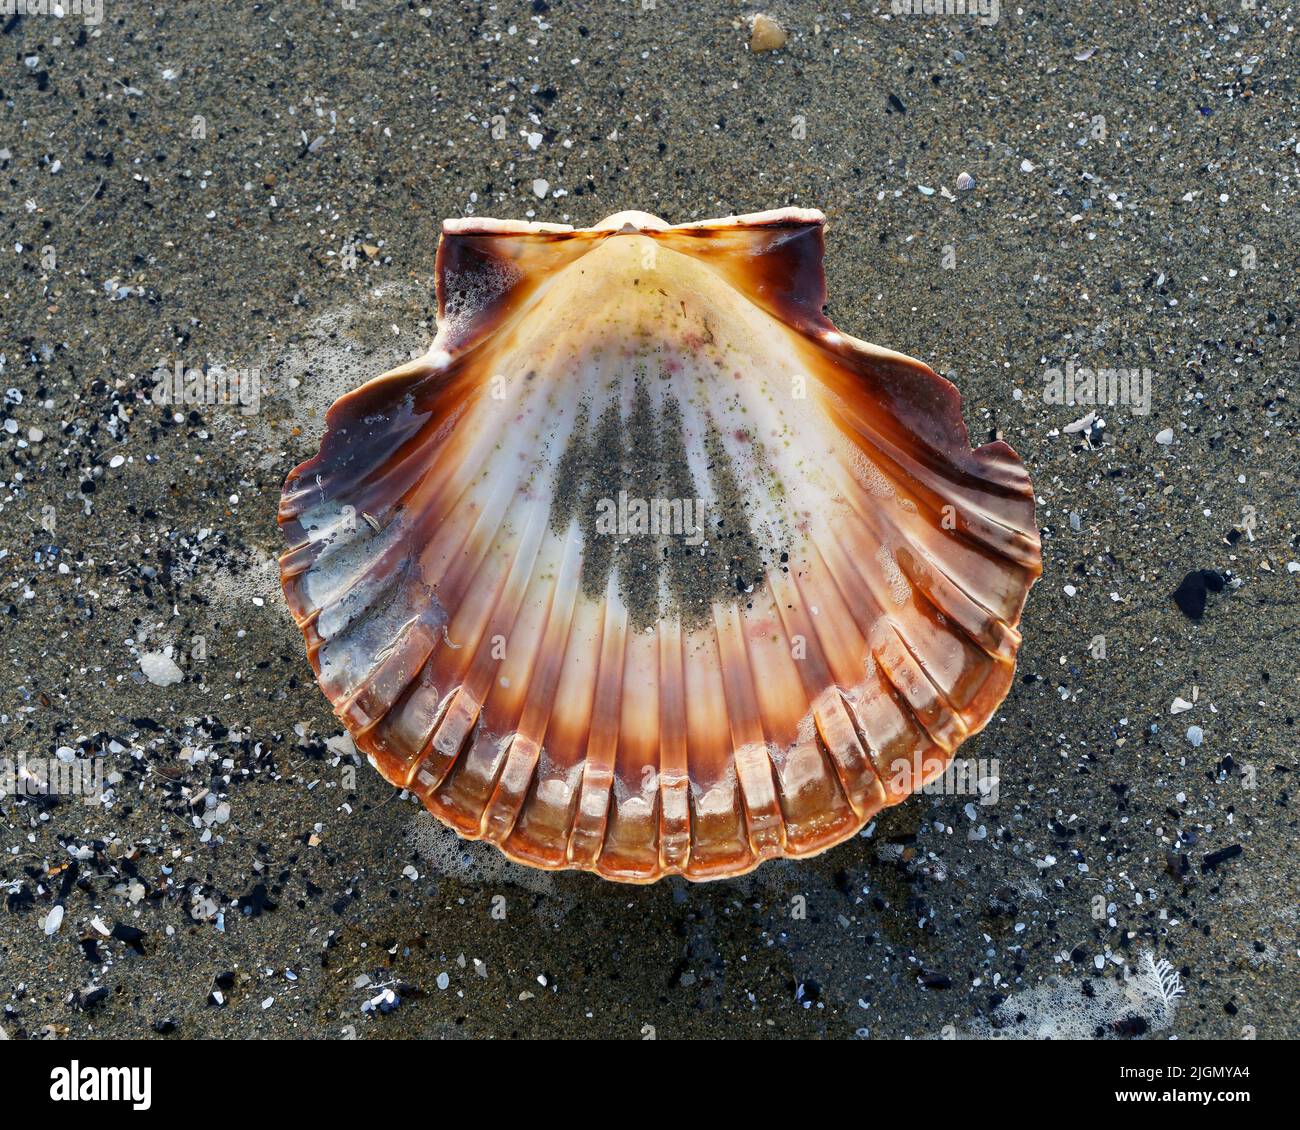 One half of a bivalve scallop shell washed up on a beach, Motueka, New Zealand. Stock Photo